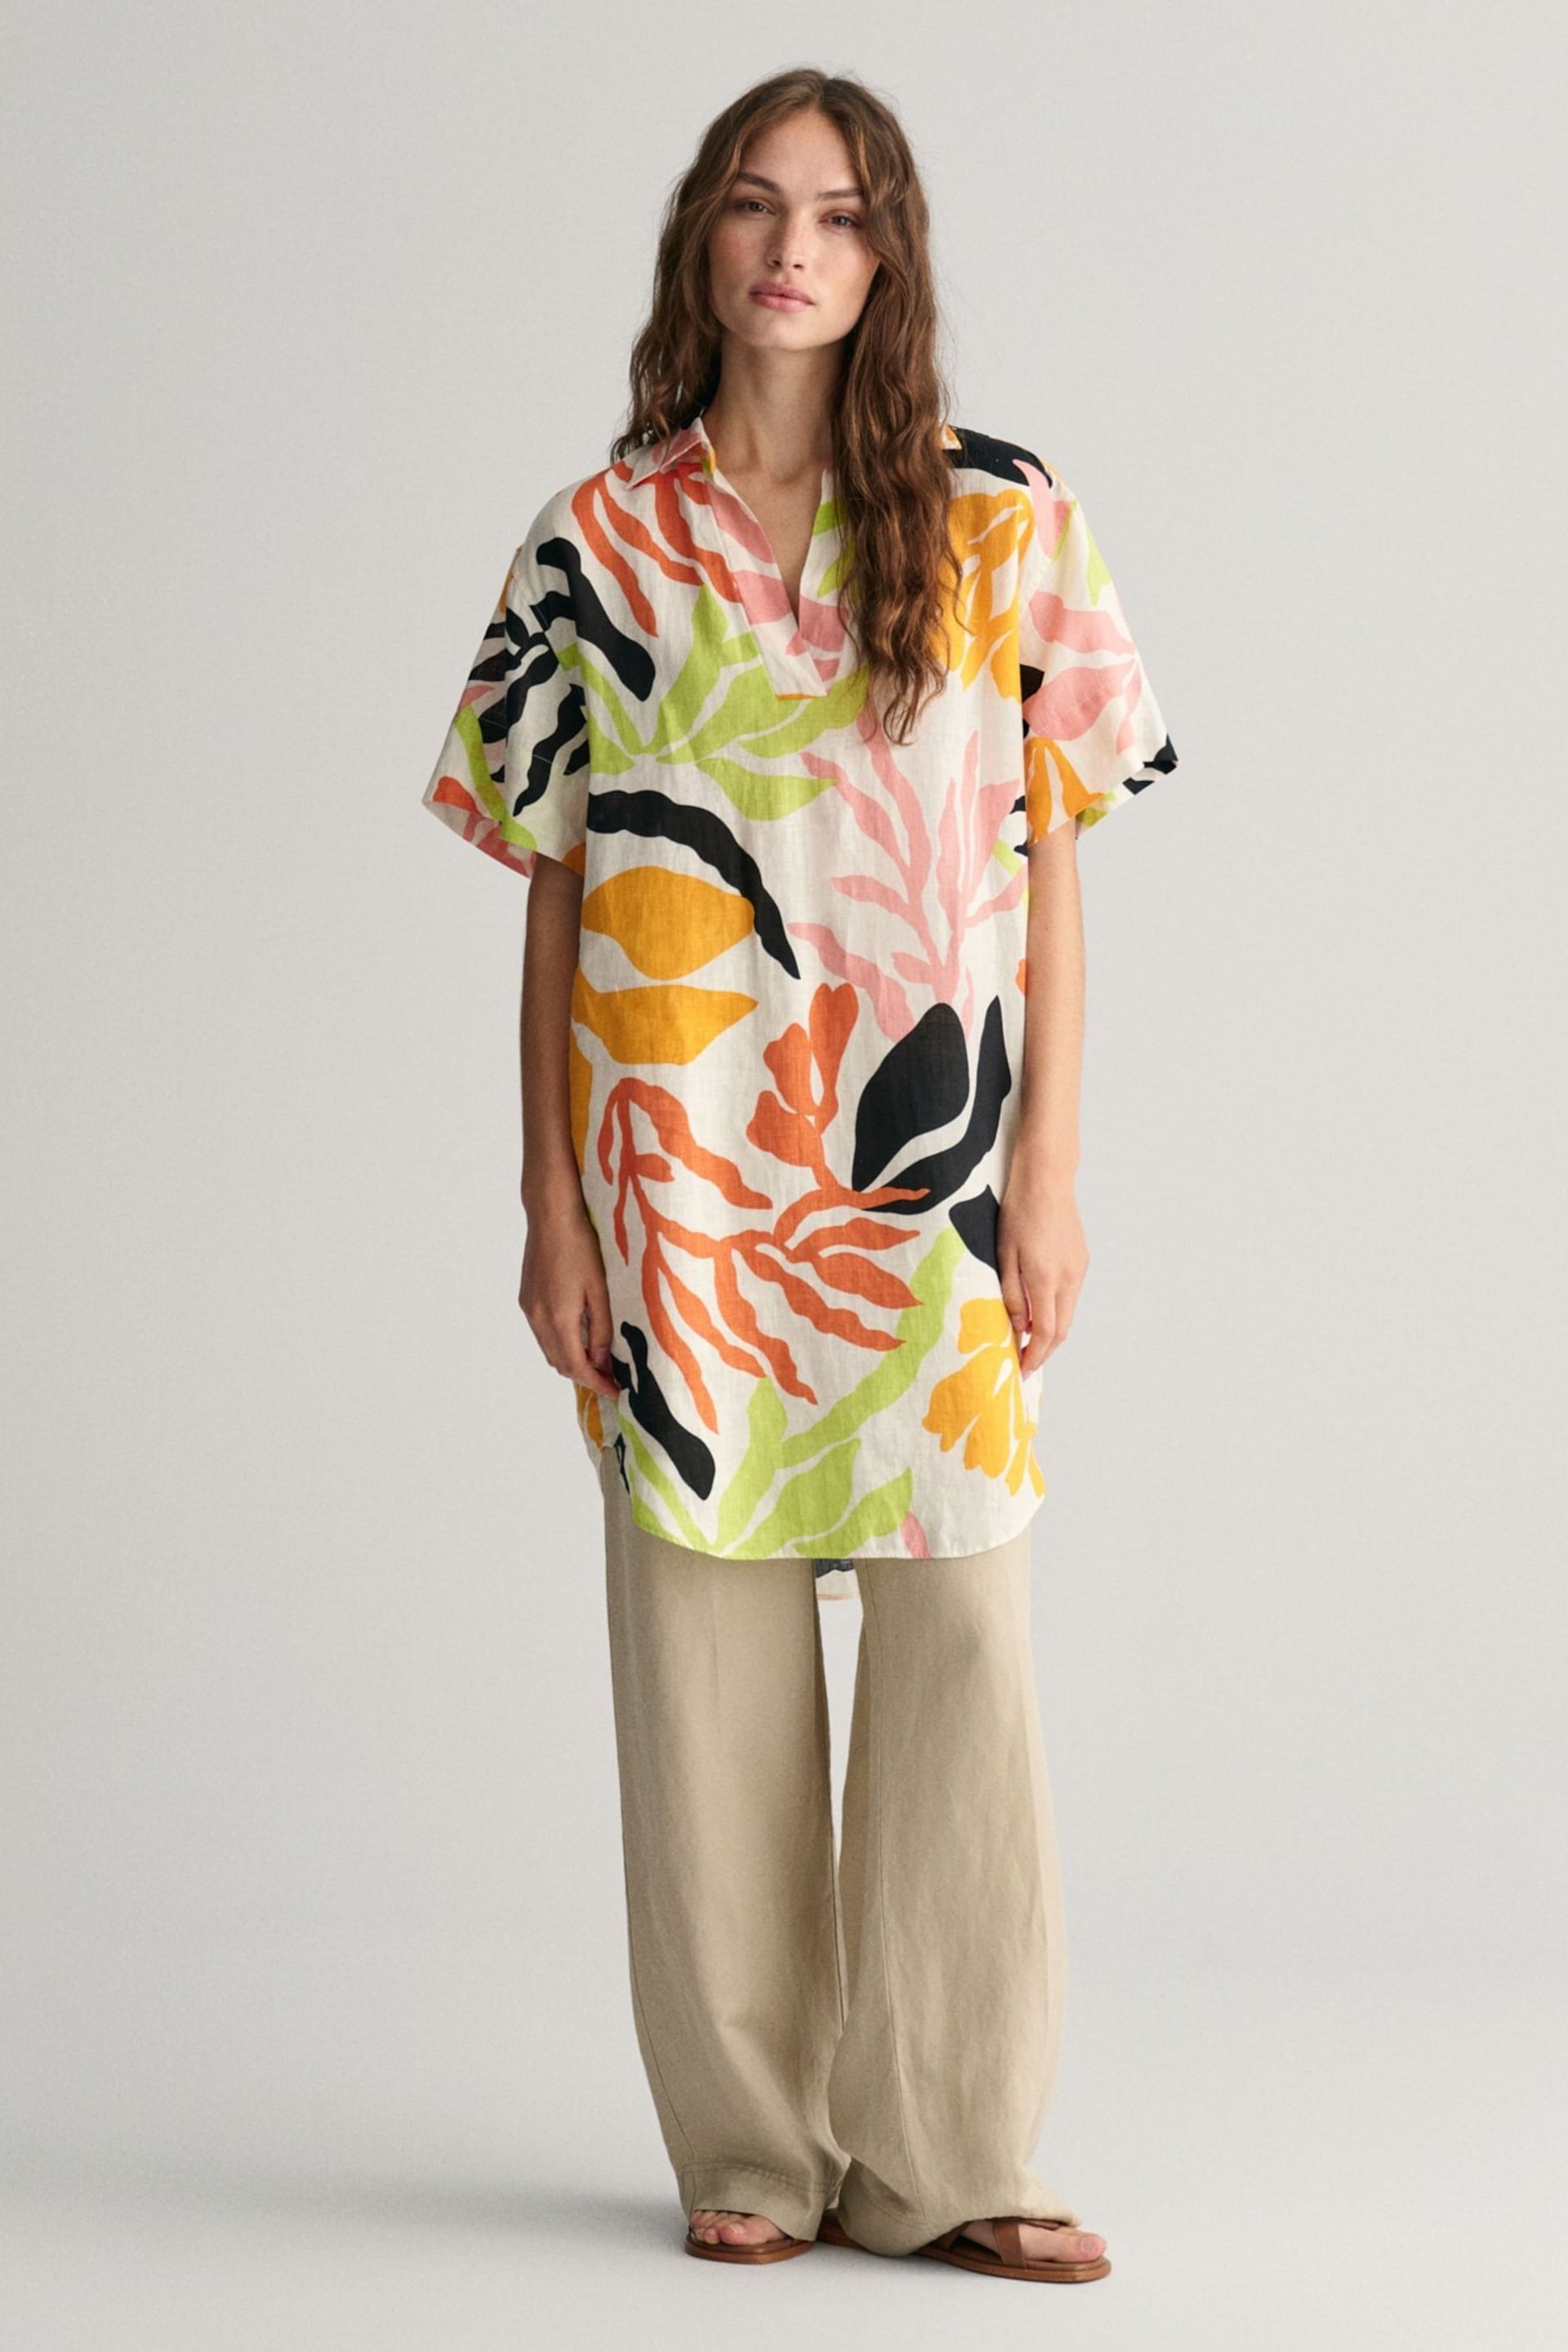 GANT Yellow Palm Print Linen Short Sleeve Kaftan Dress - Image 1 of 6